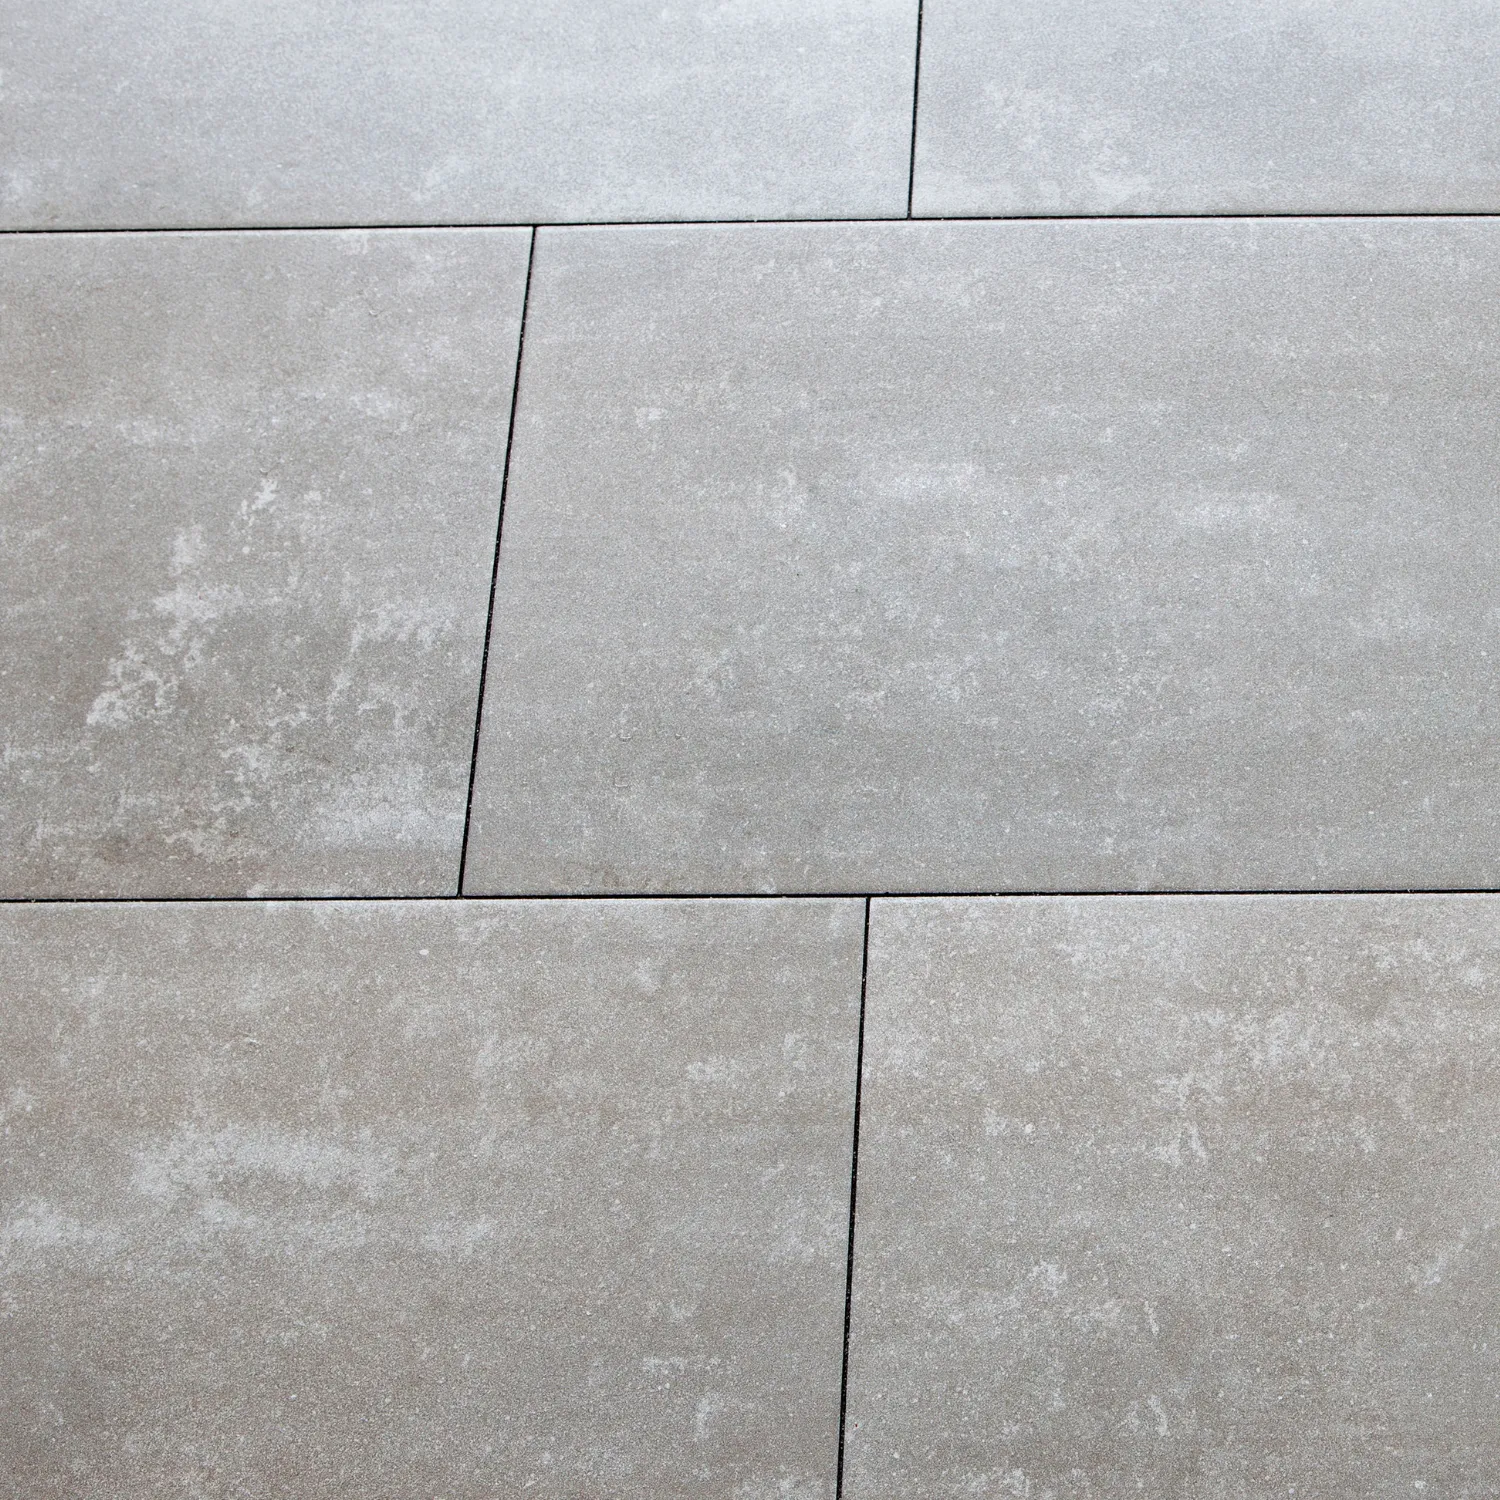 grey tiles on floor